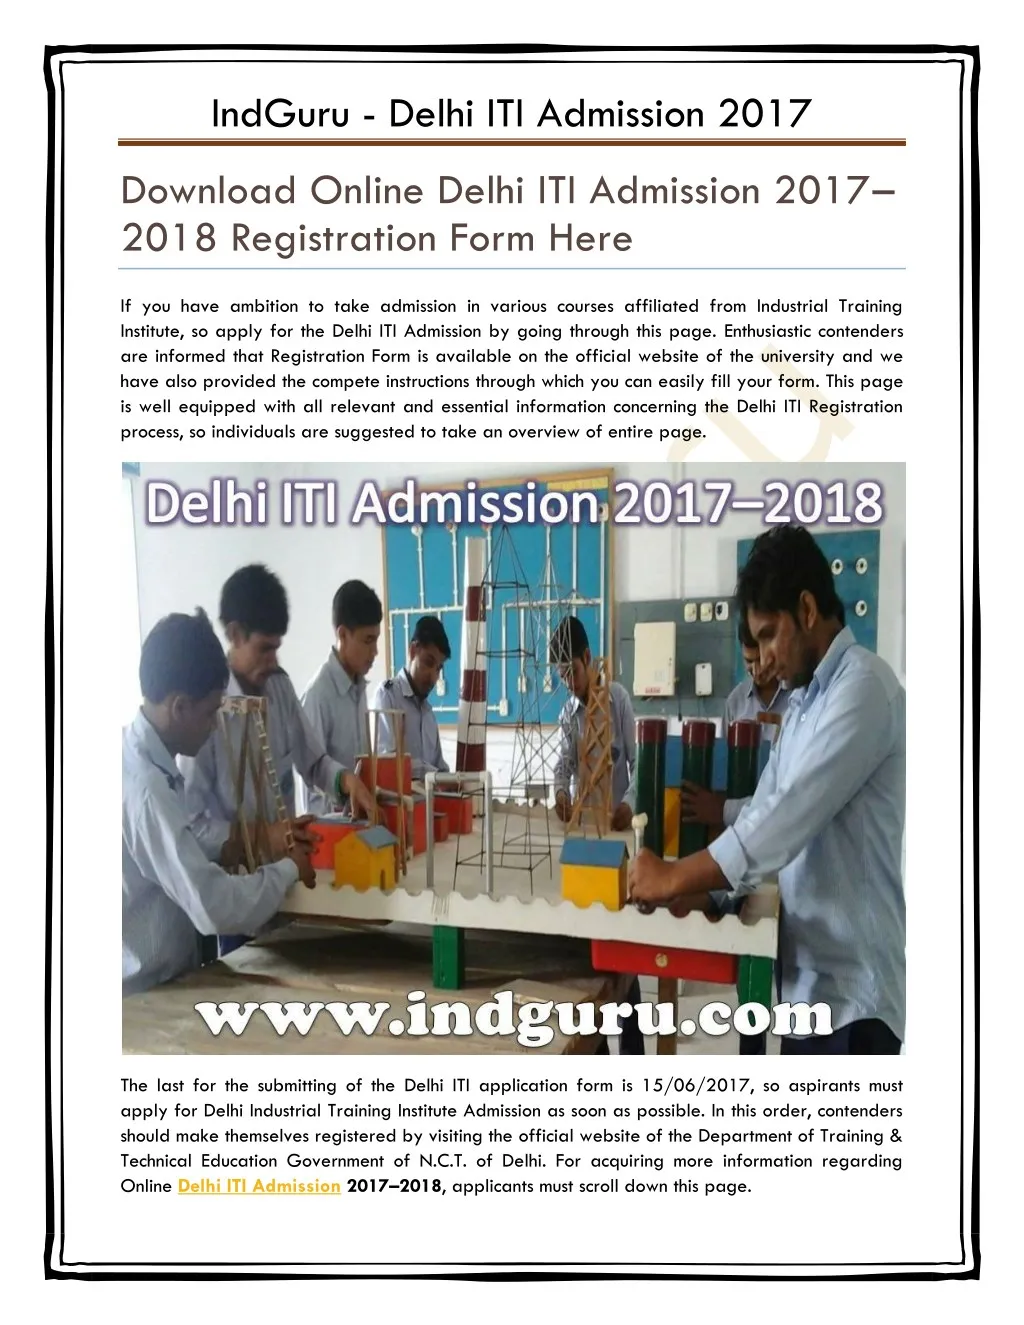 indguru delhi iti admission 2017